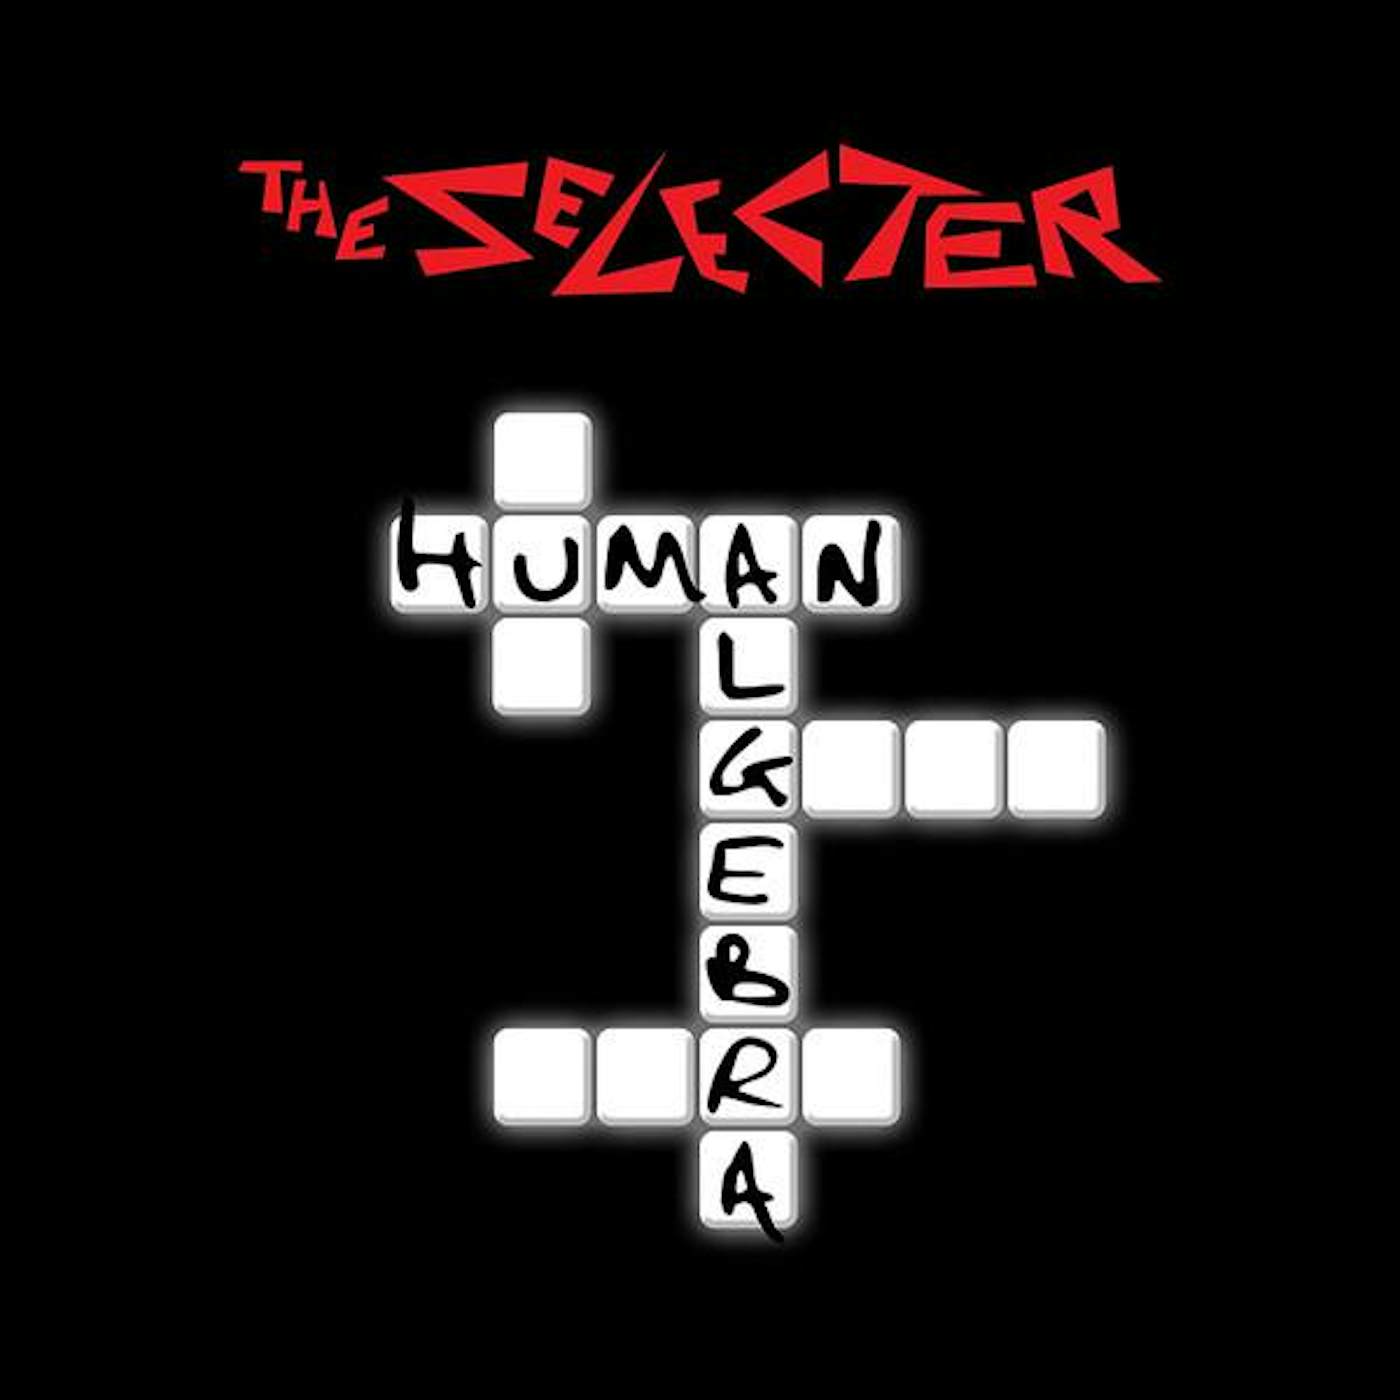 Selecter Human Algebra (Import) Vinyl Record